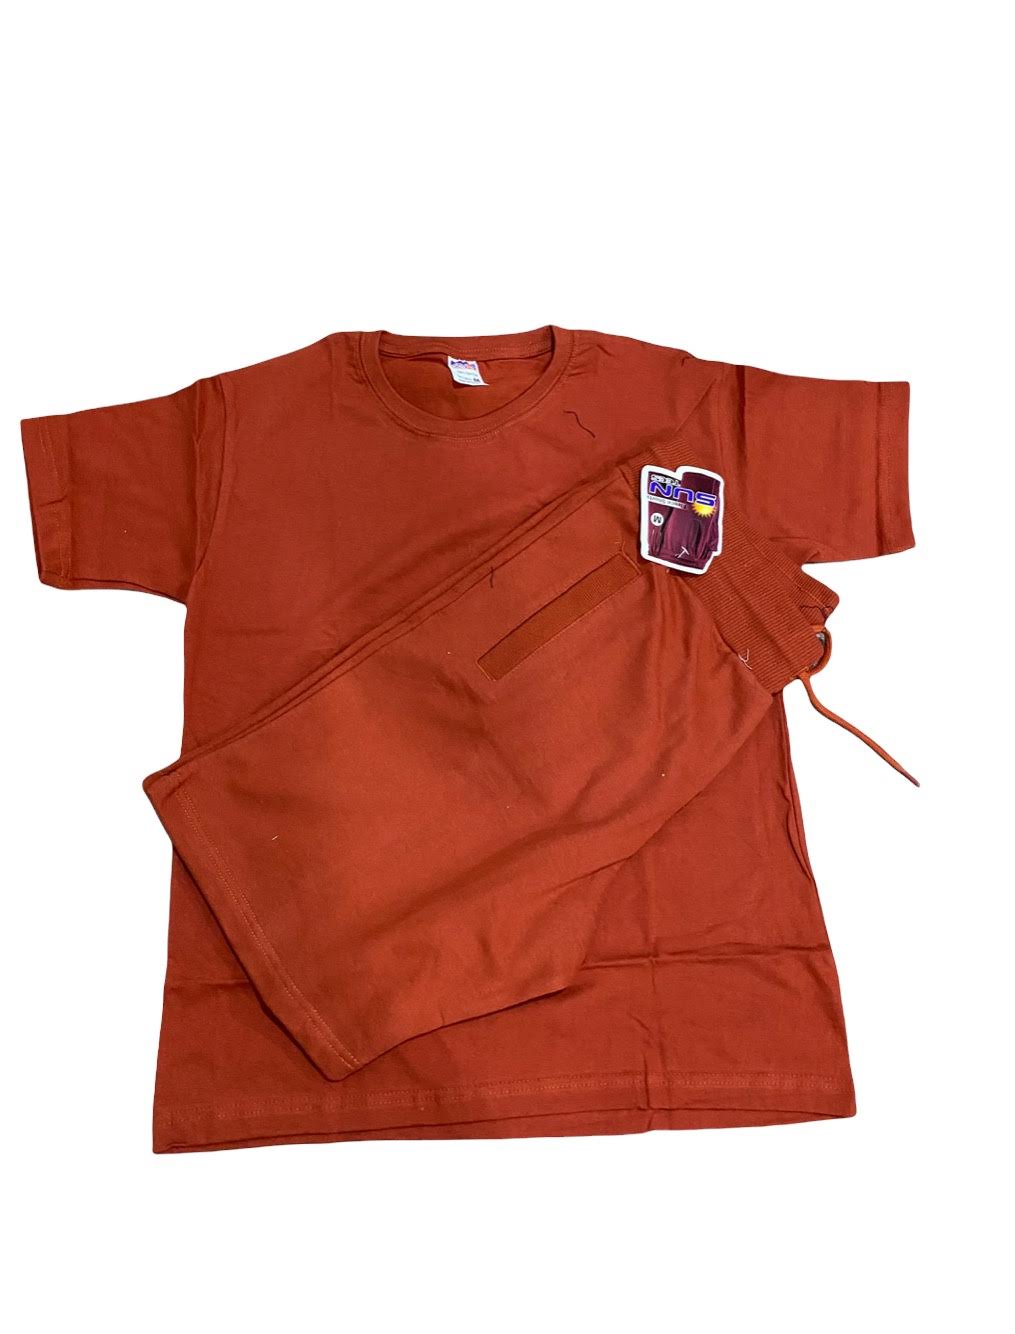 Dark orange t-shirt and short sets